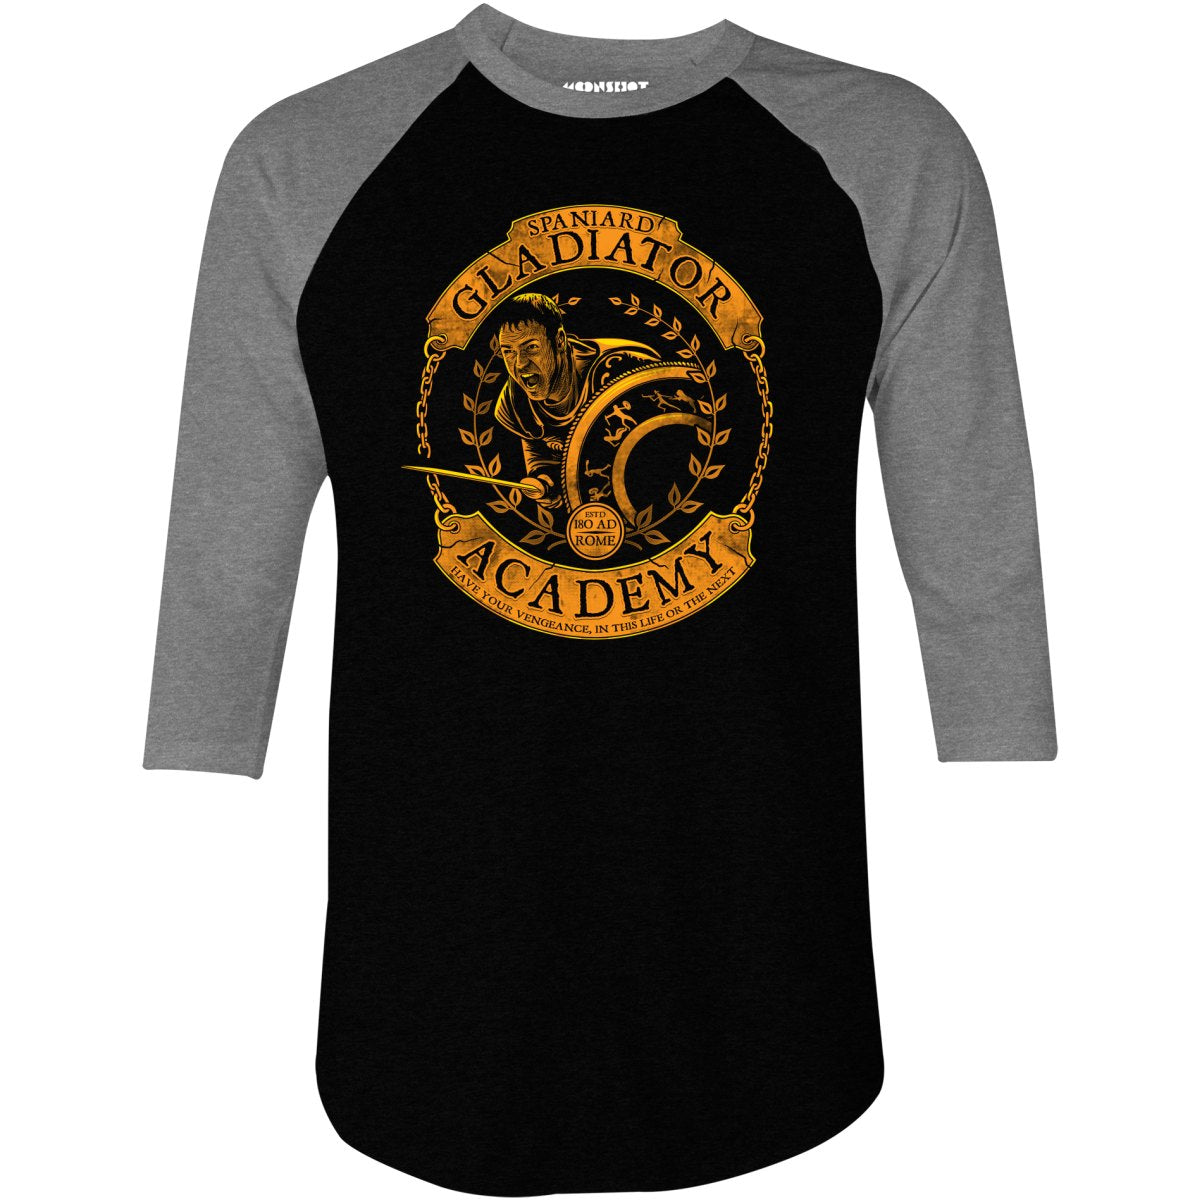 Spaniard Gladiator Academy - 3/4 Sleeve Raglan T-Shirt